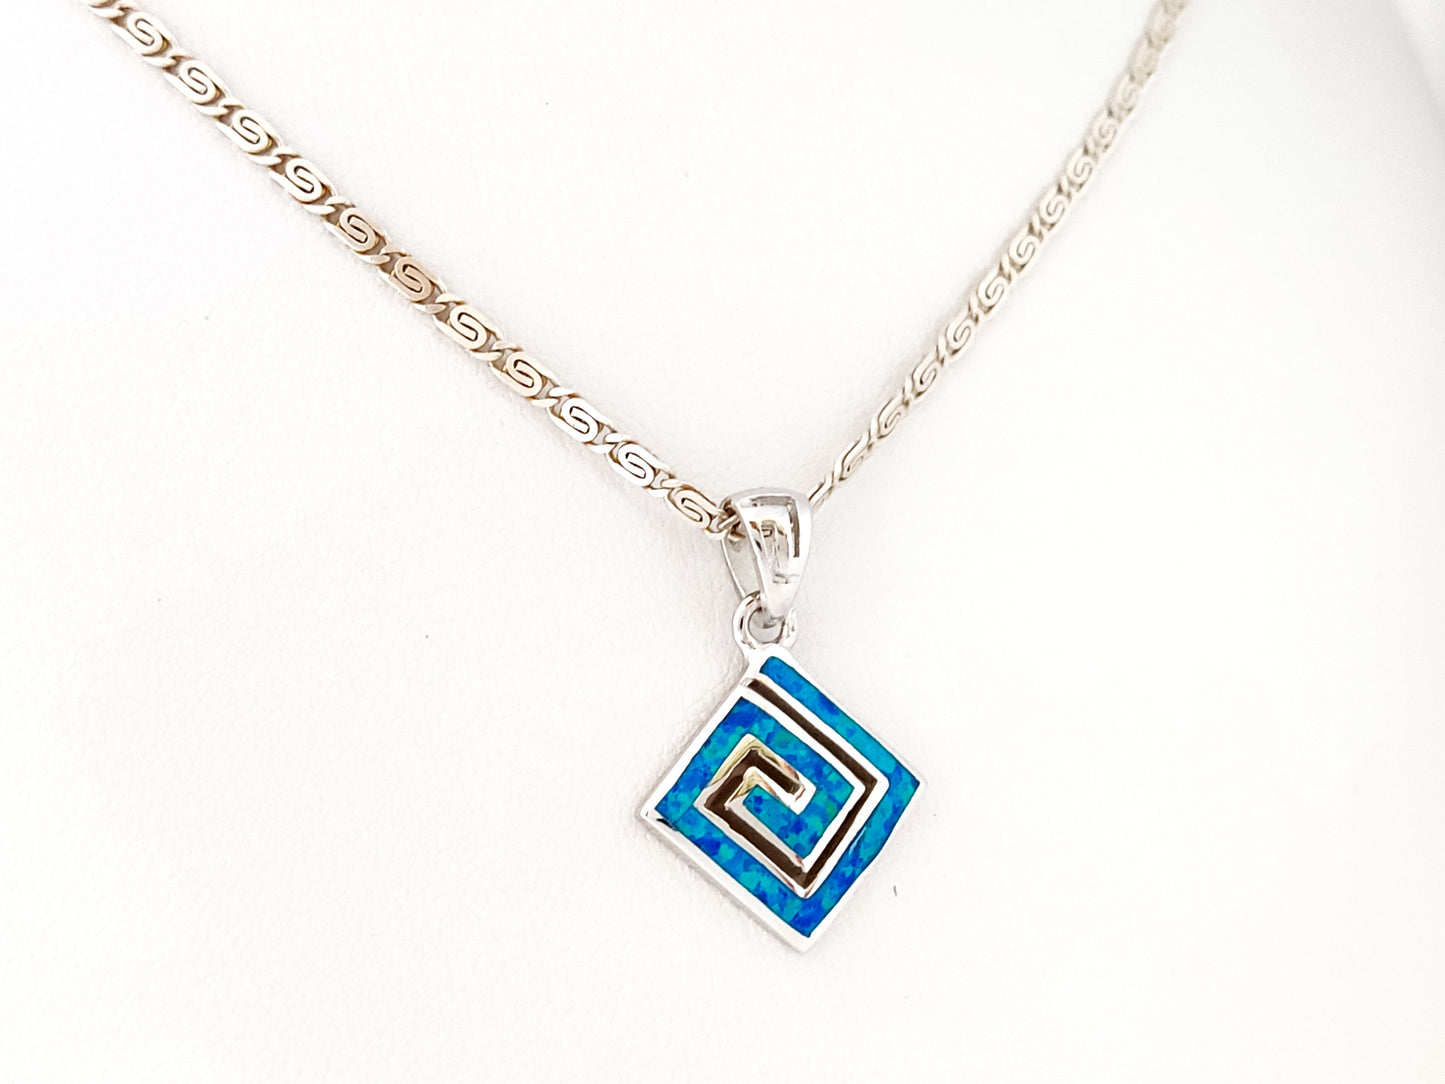 Blauer Opal, griechischer Halskettenanhänger aus Silber, 12 x 12 mm